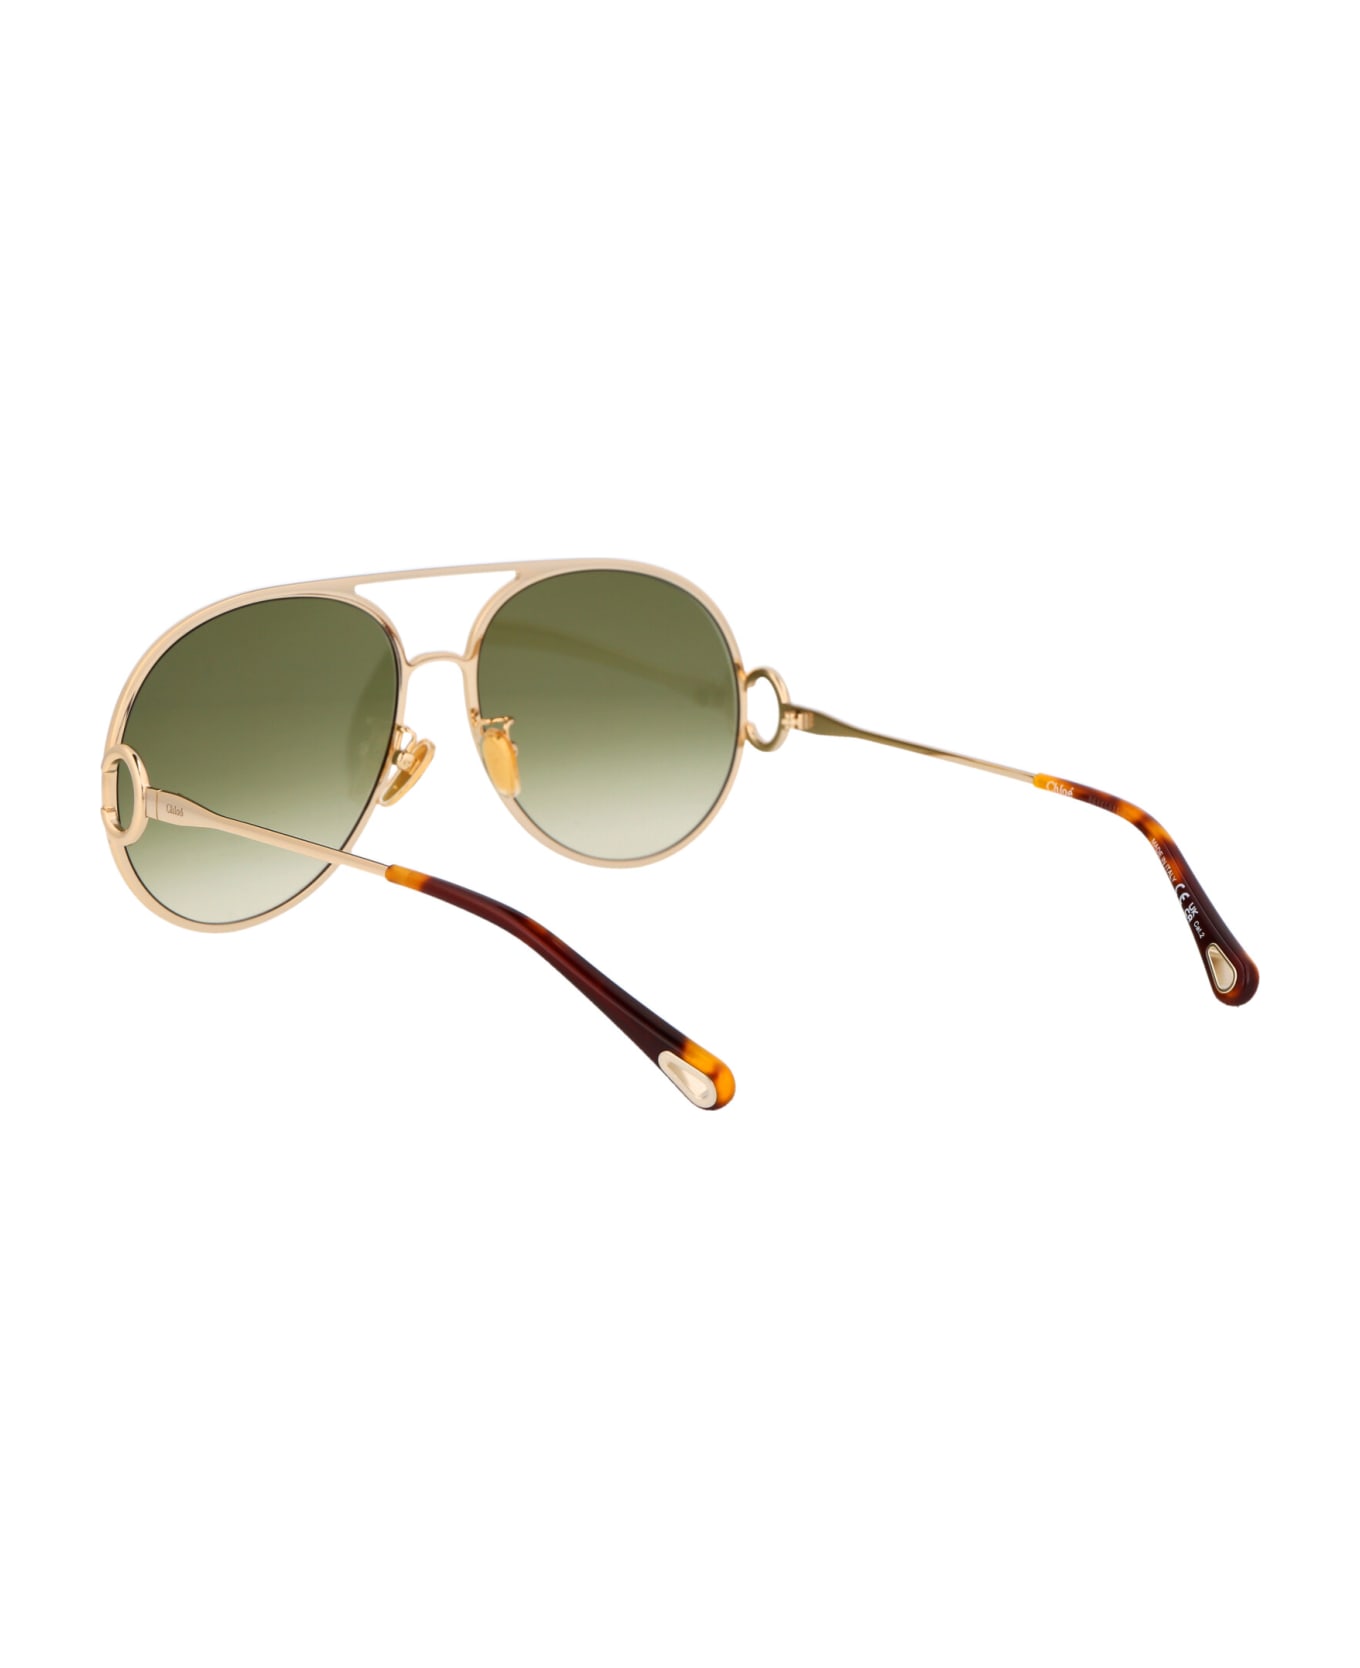 Chloé Eyewear Ch0145s Sunglasses - 002 GOLD GOLD GREEN サングラス